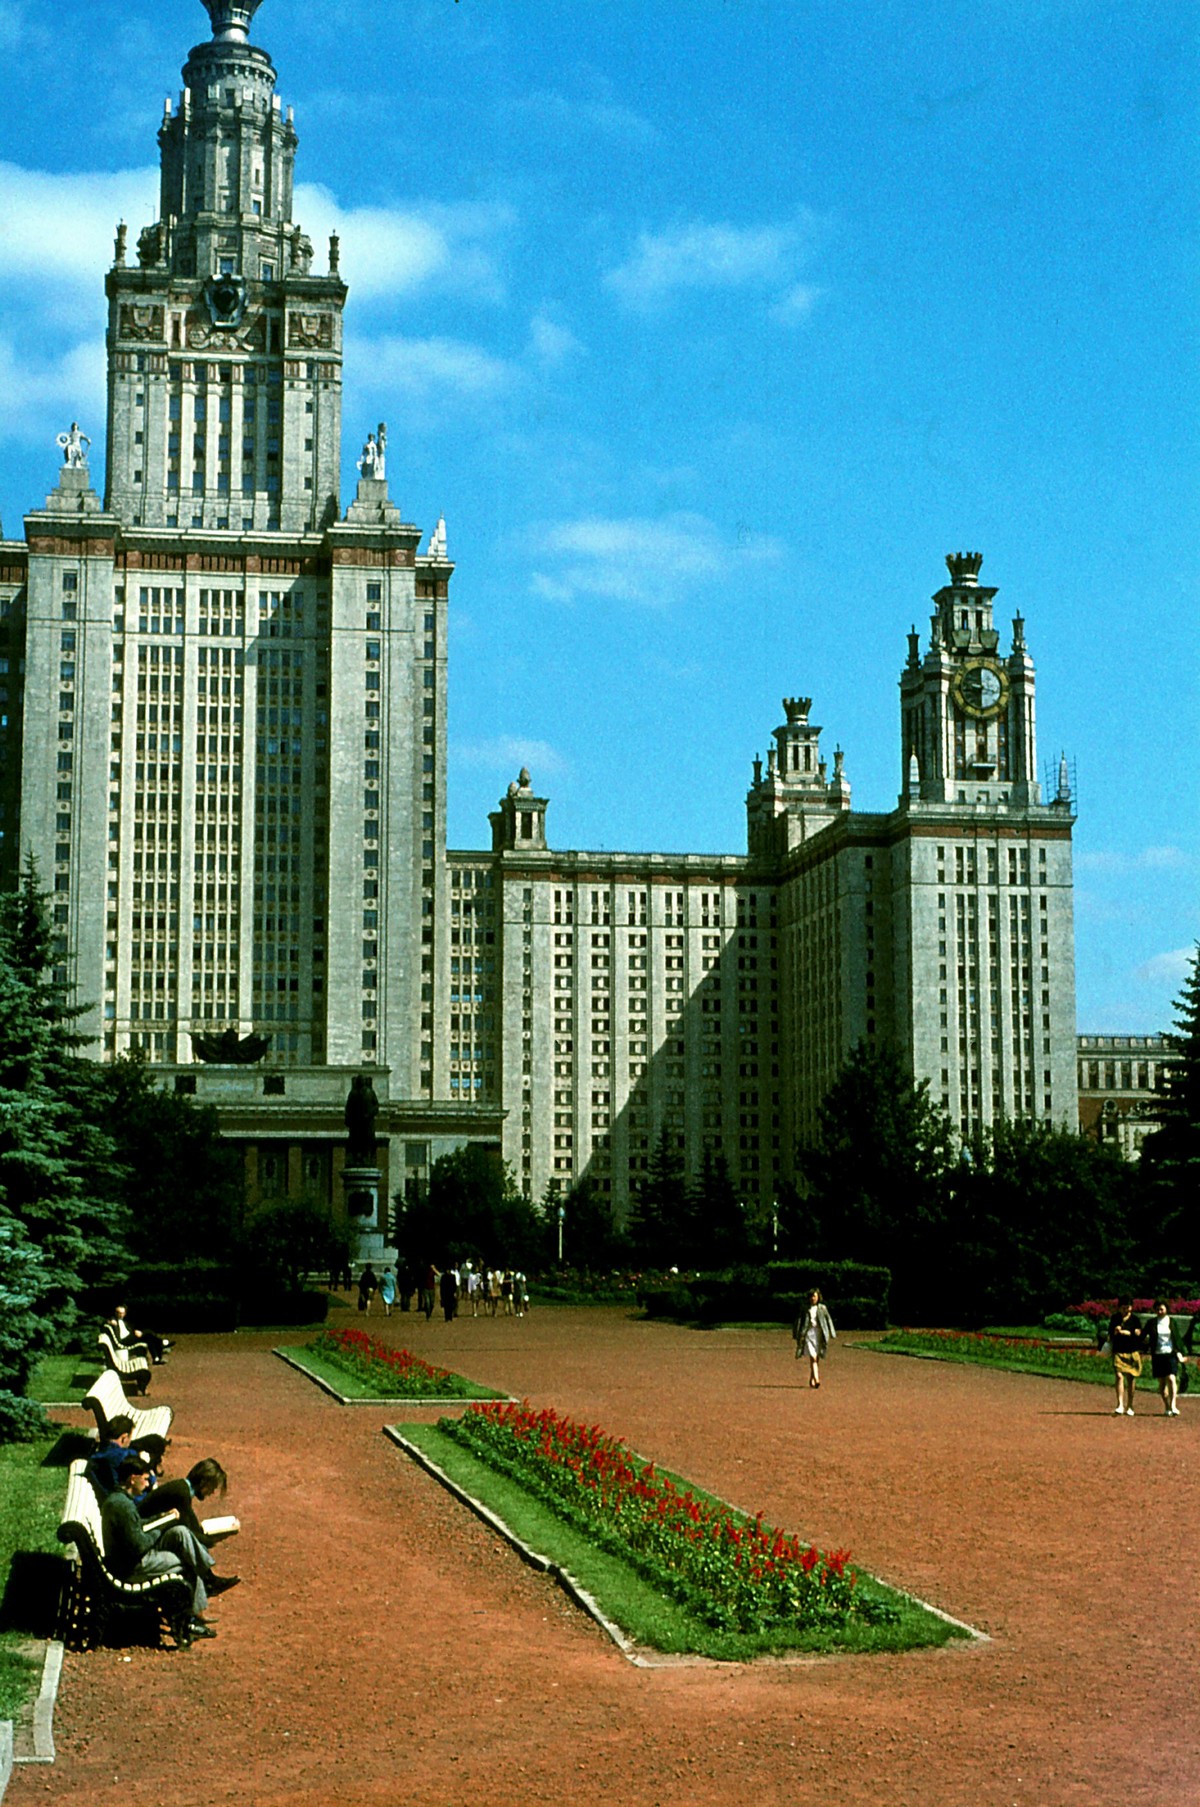 Москва 1970-х на снимках британского фотографа